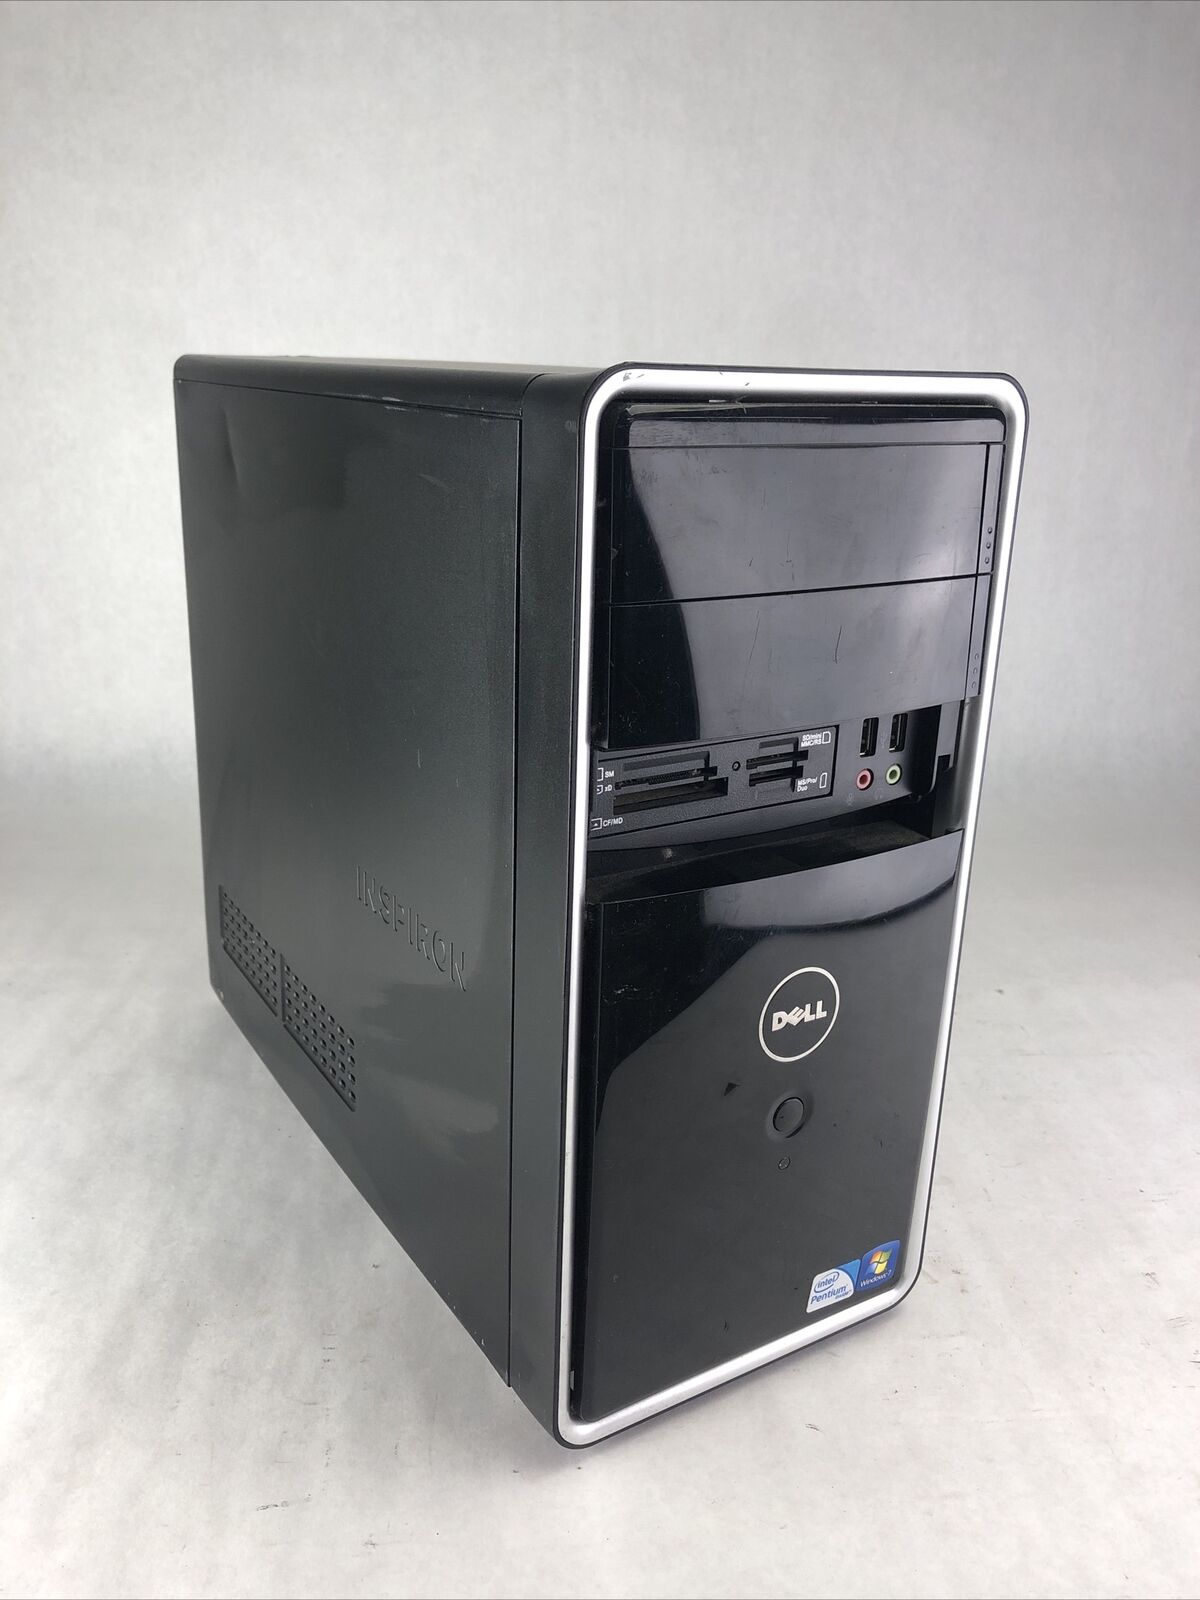 Dell Inspiron 560 MT Intel Pentium Dual-Core E5800 3.2GHz 4GB RAM No HDD No OS